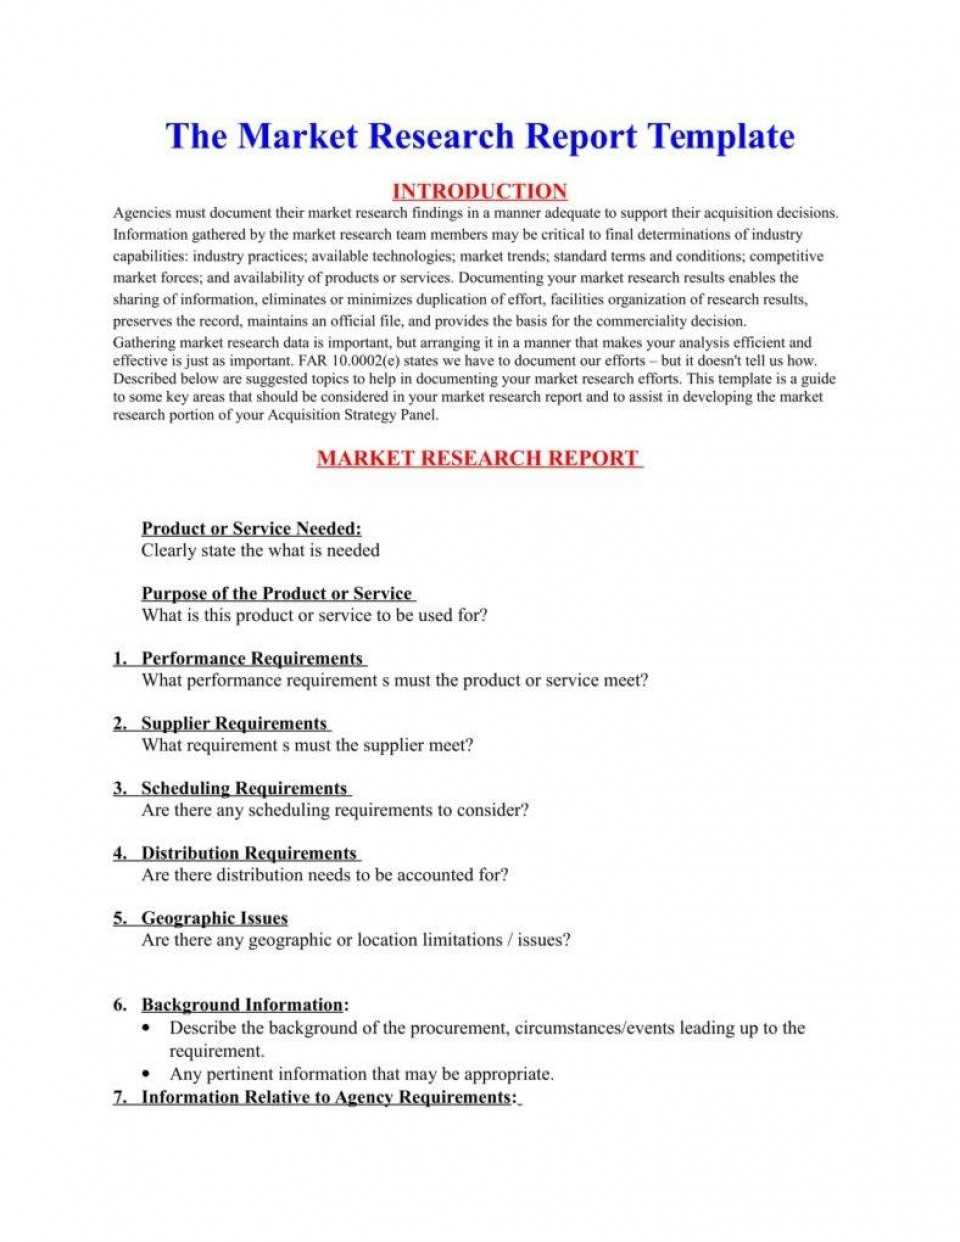 008 Market Research Report Template Unusual Ideas Word Free Throughout Market Research Report Template